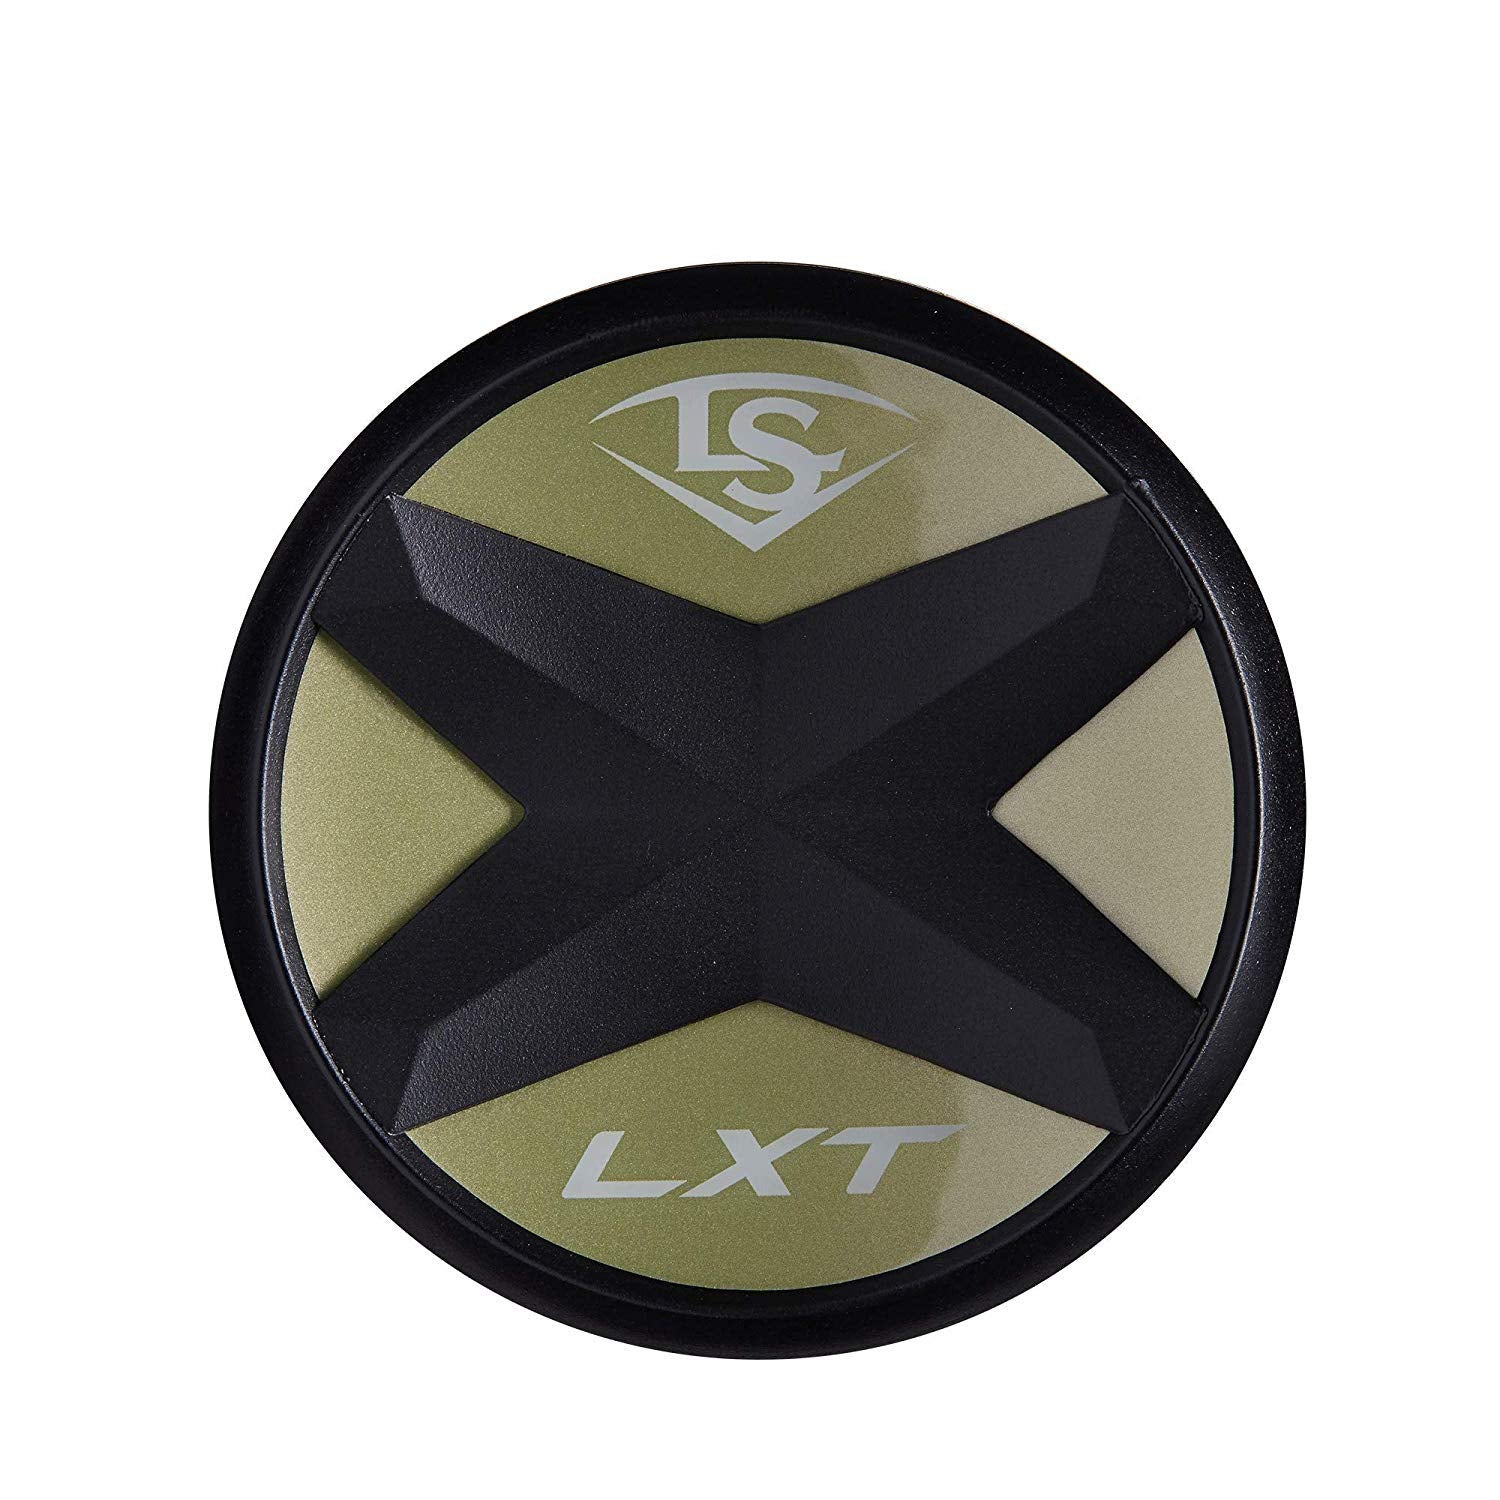 2020 Louisville Slugger LXT X20 Fastpitch Softball Bat -10oz WTLFPLXD10-20